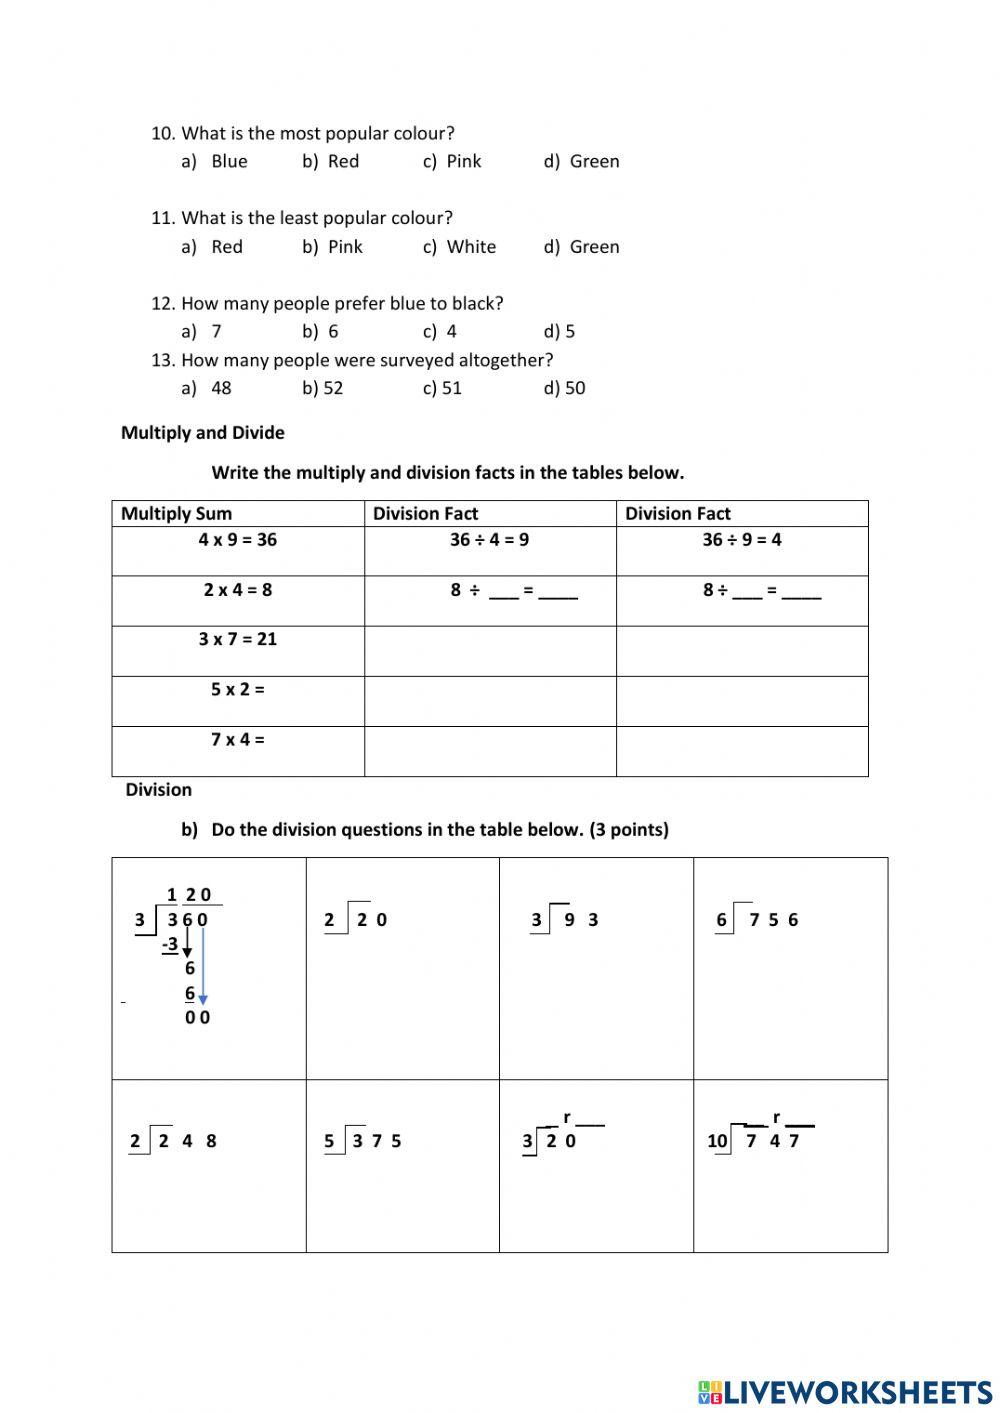 P3 Math Mid Term Review Quiz